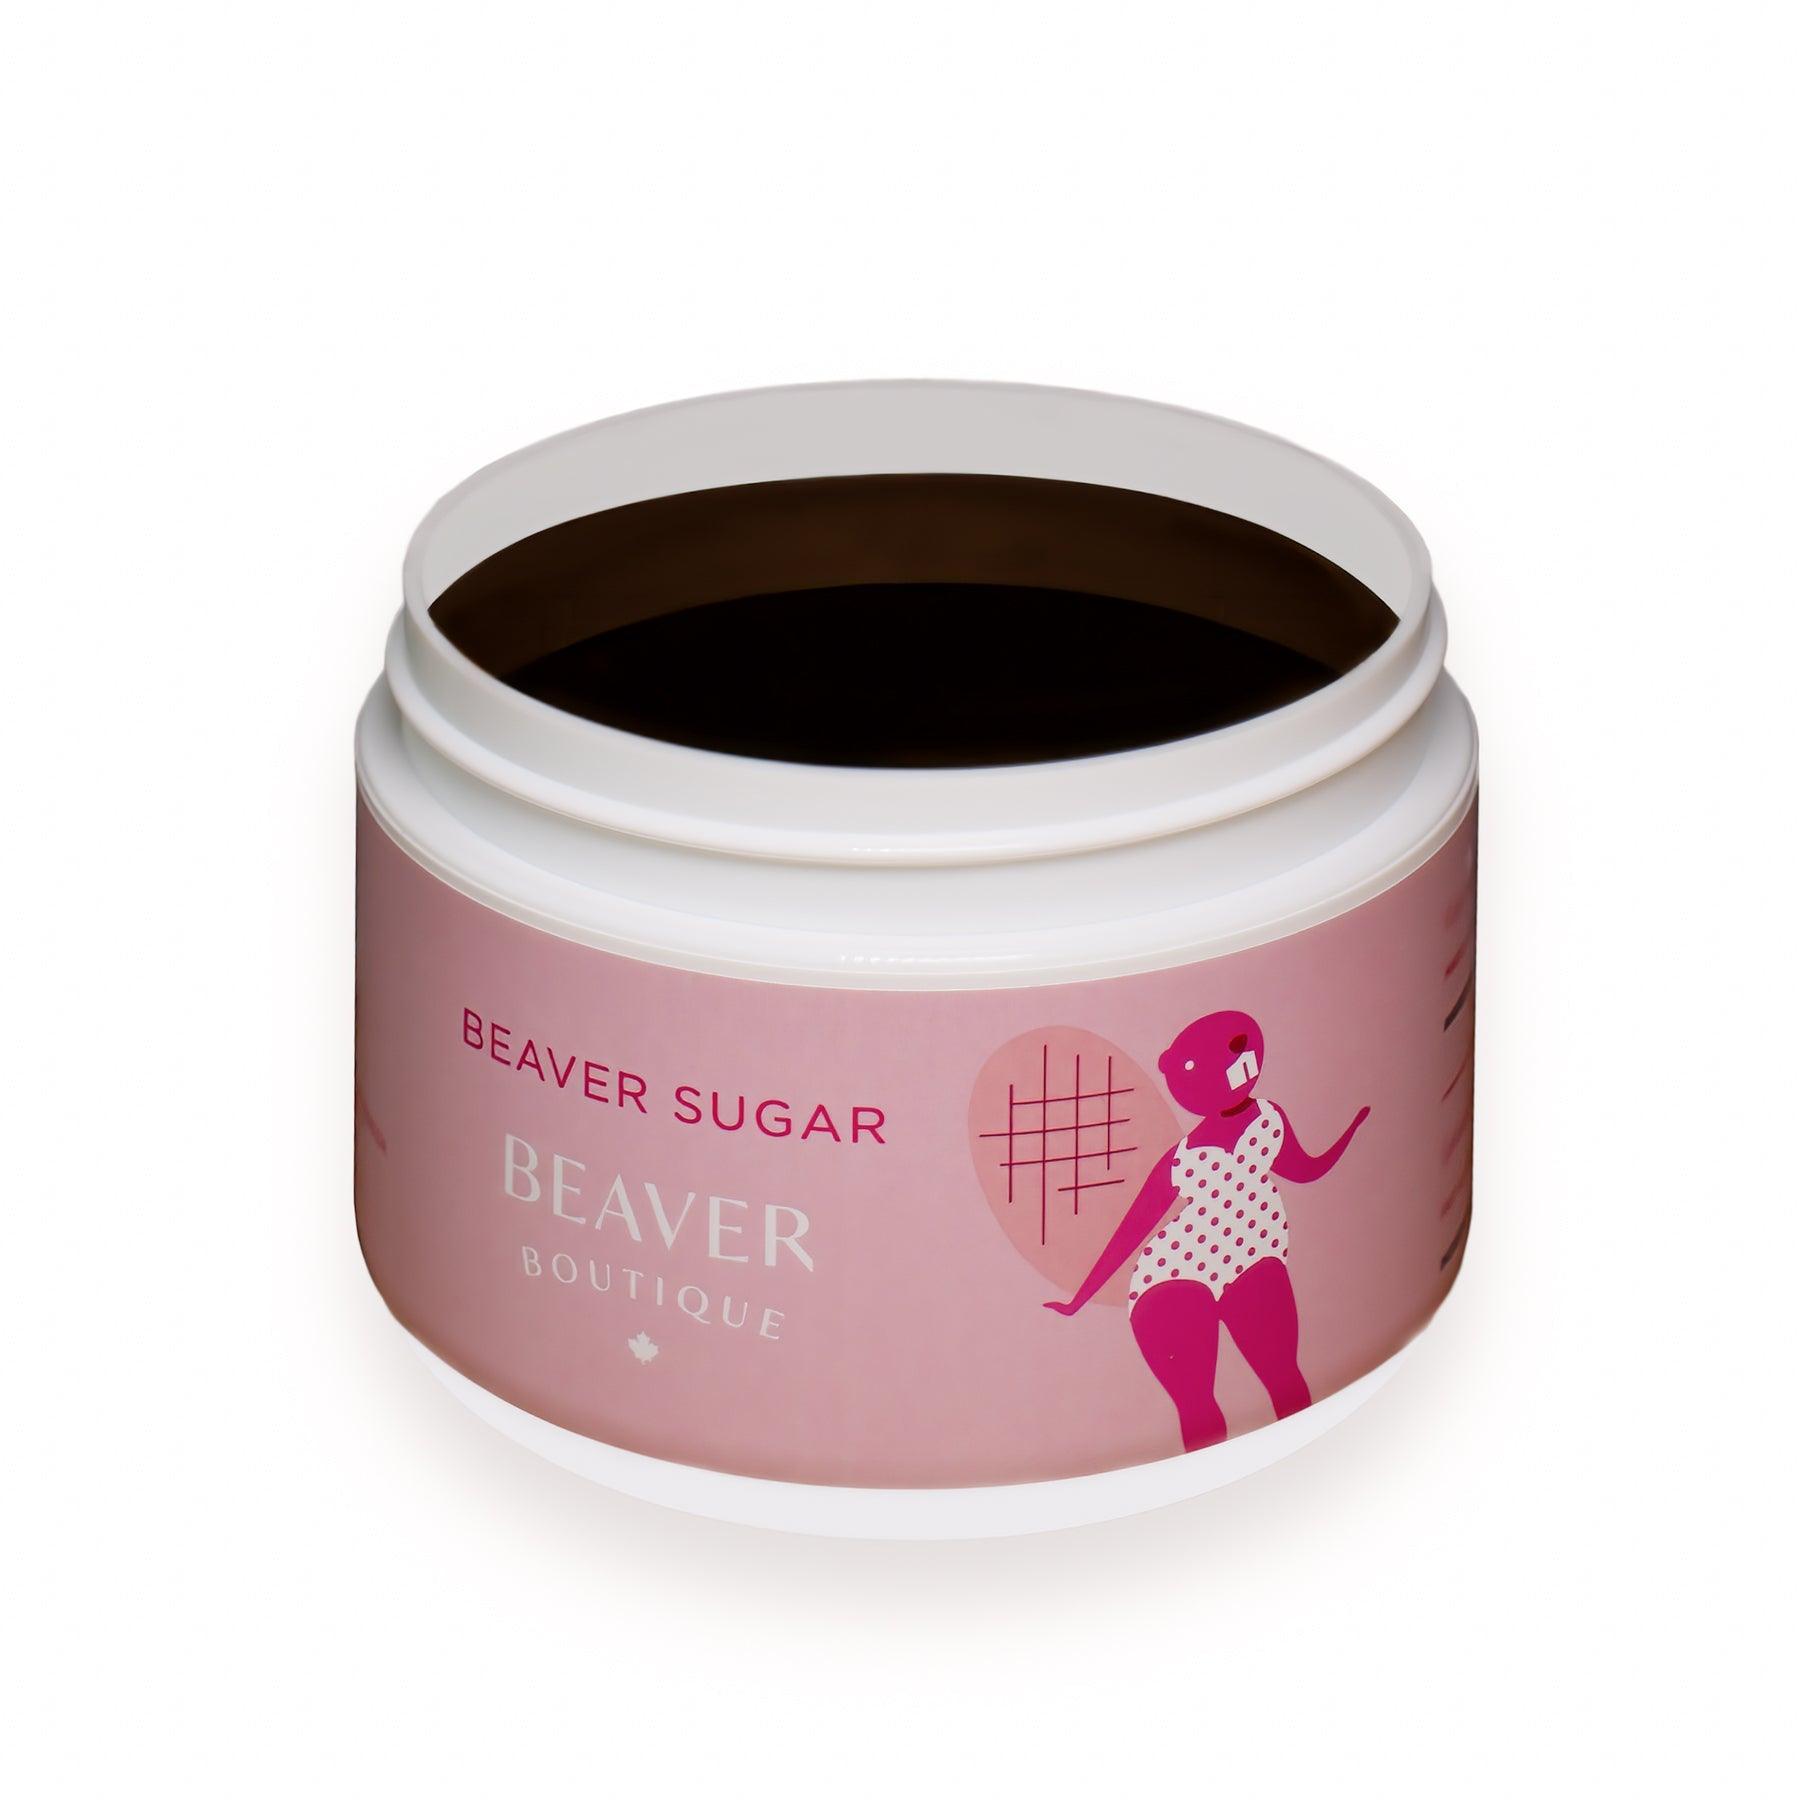 Beaver Sugar Wax Hair Removal Kits Bundle | 2 kits ($28.95/kit) - Beaver Boutique